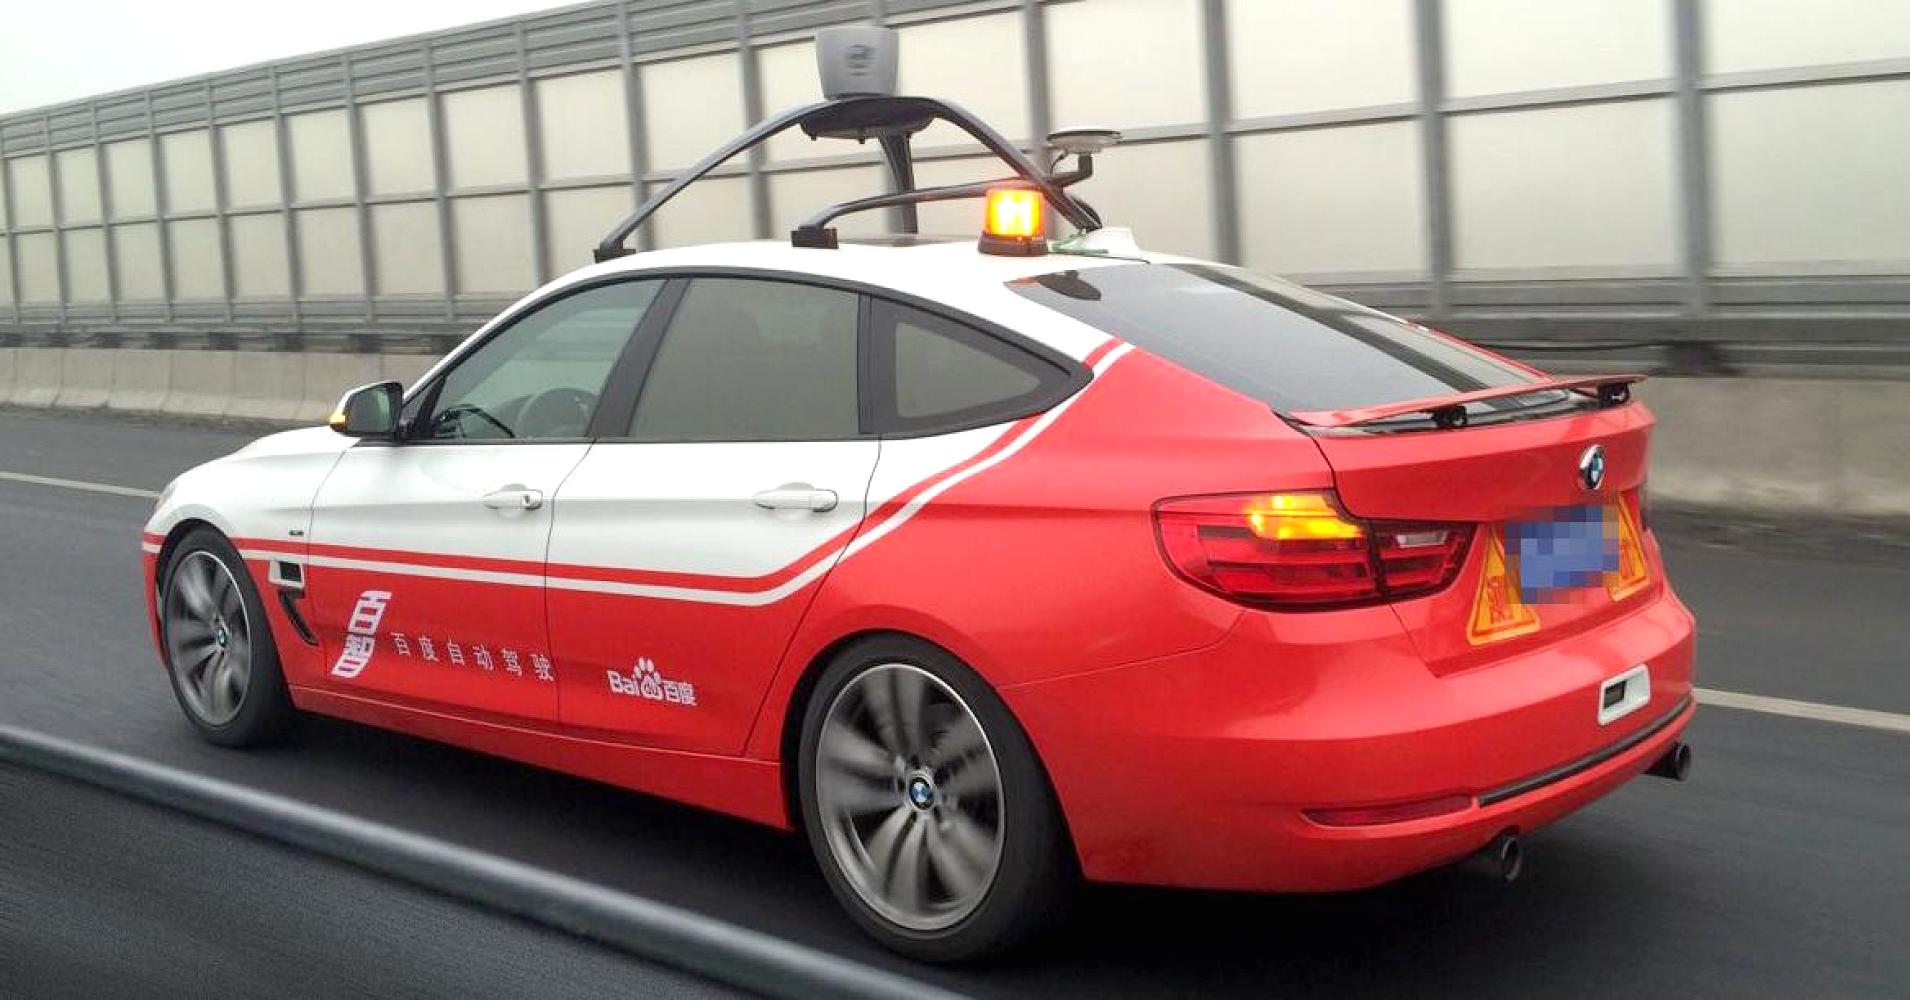 Baidu Receives Autonomous Vehicle Testing Permit from California’s Department of Motor Vehicles